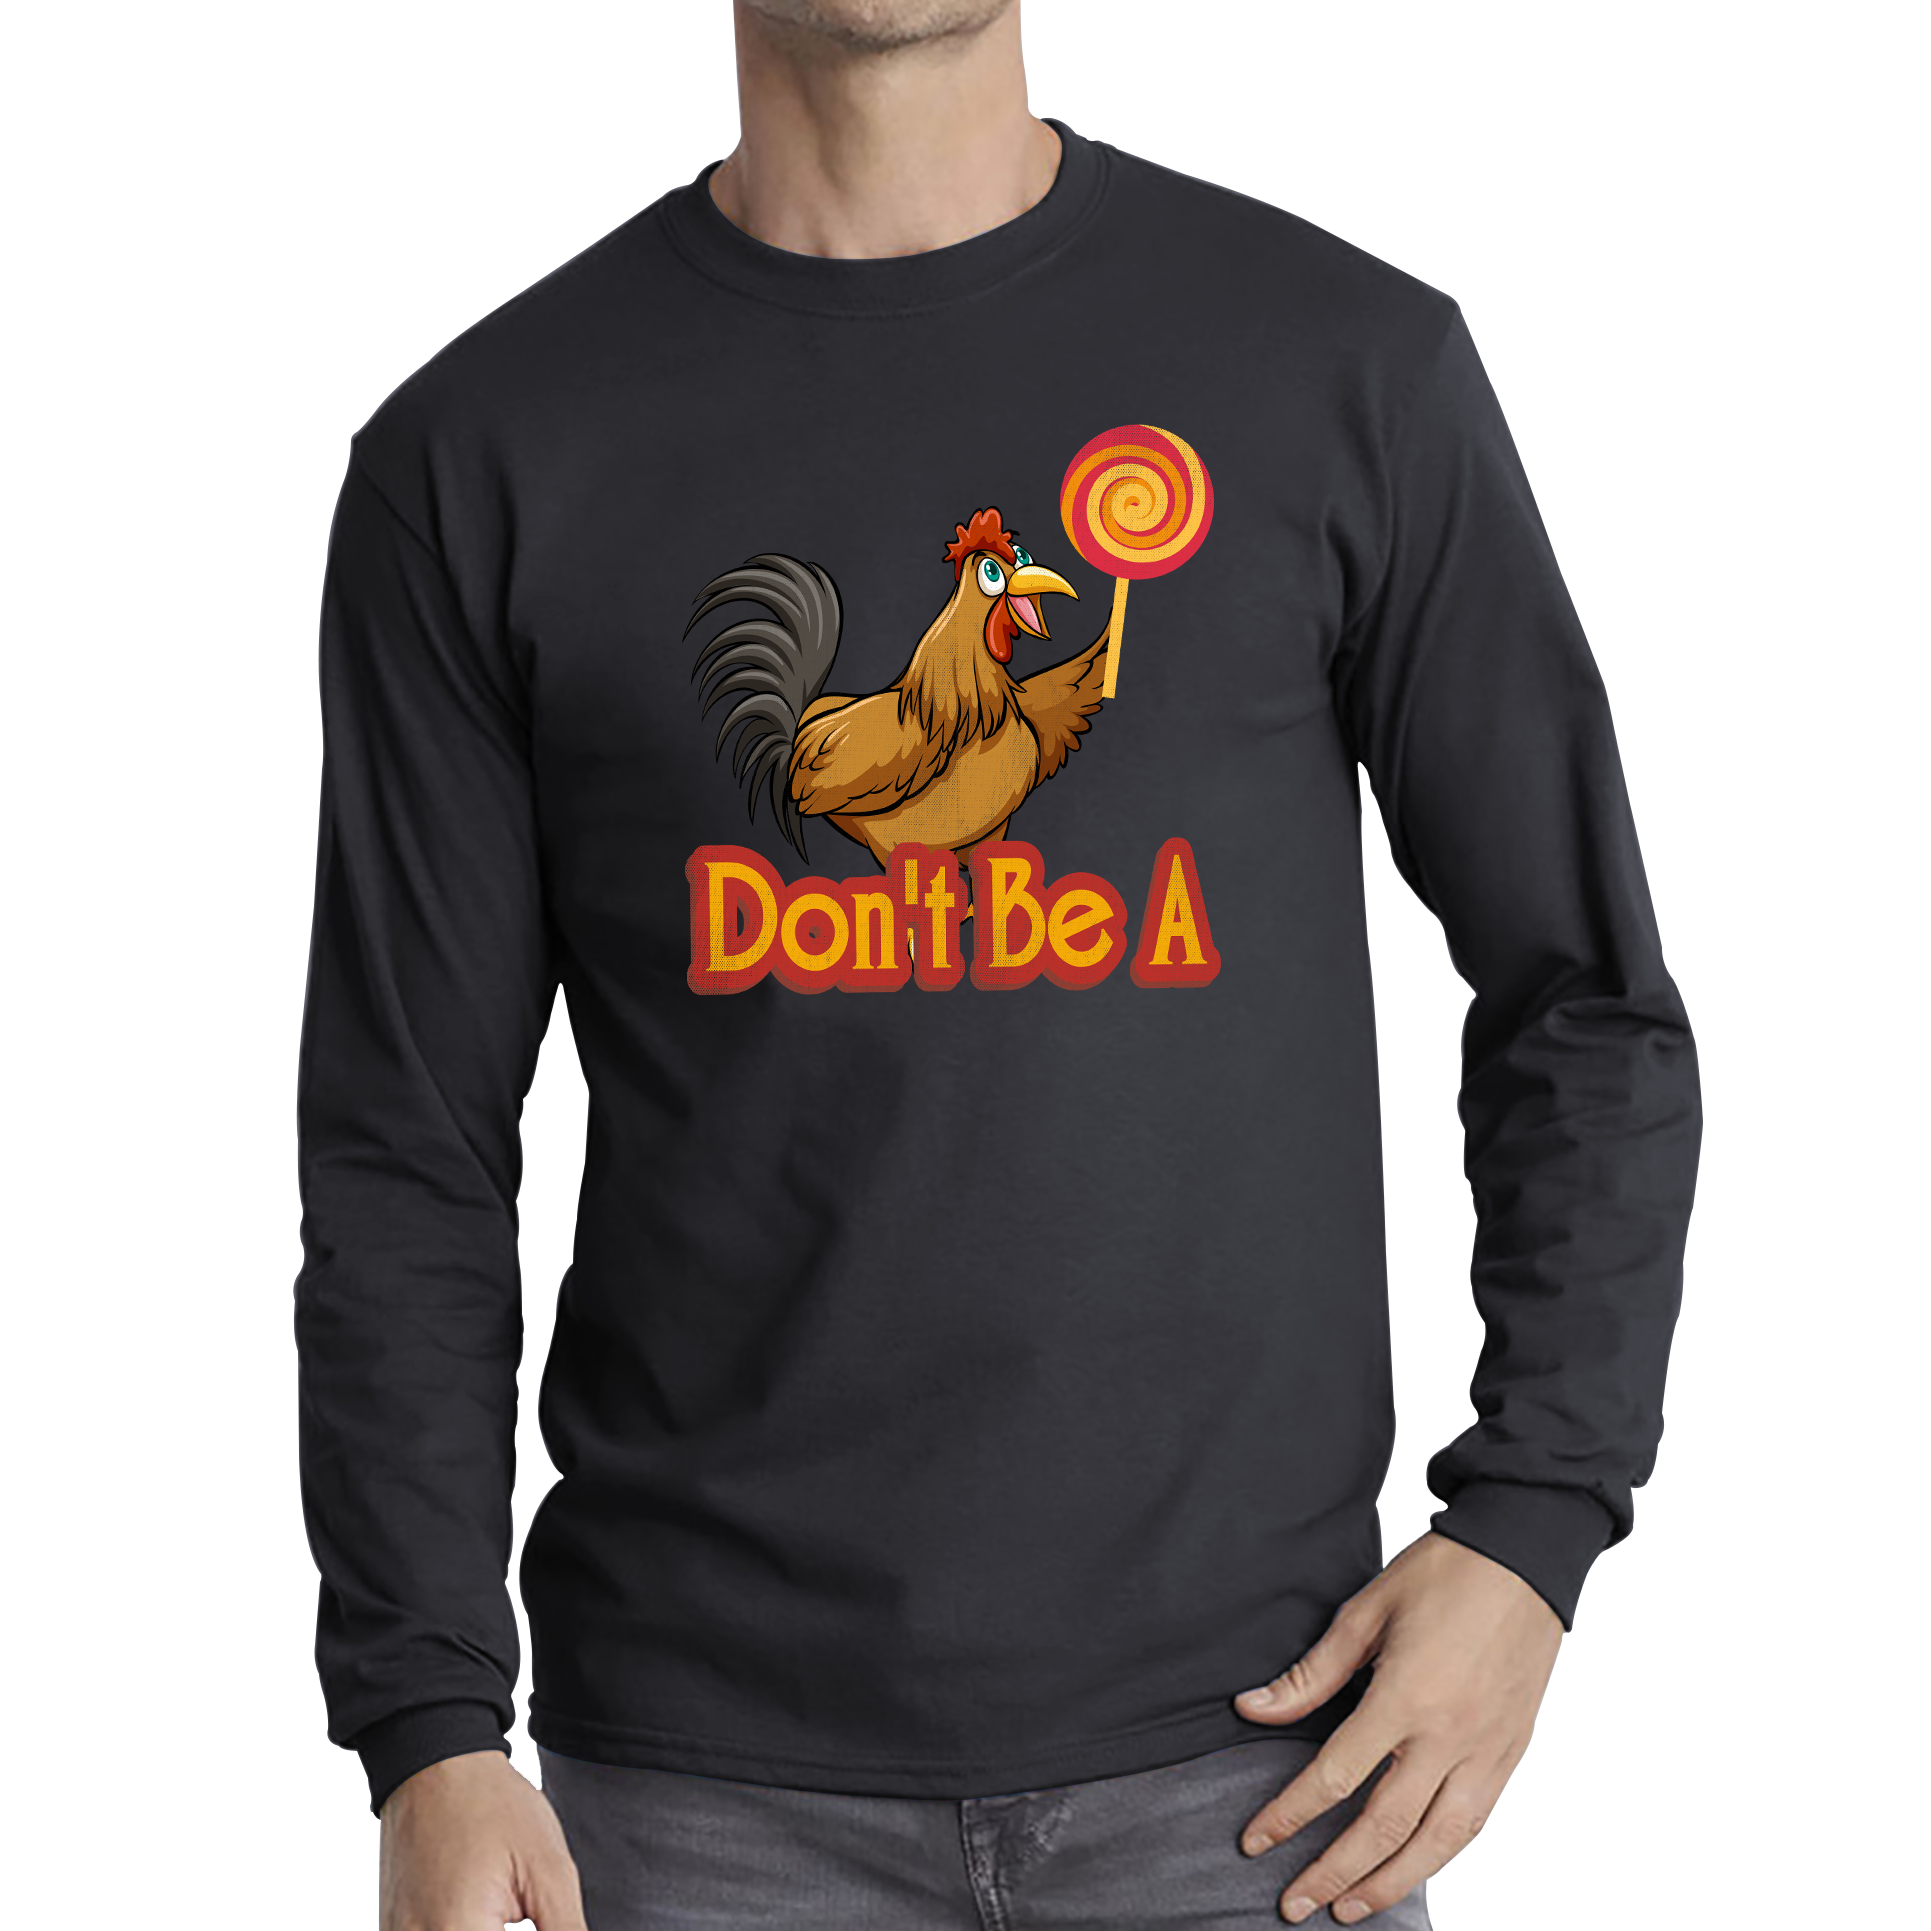 Don't Be A Cock Sucker Rooster Lollipop Candy Shirt Funny Joke Meme Long Sleeve T Shirt